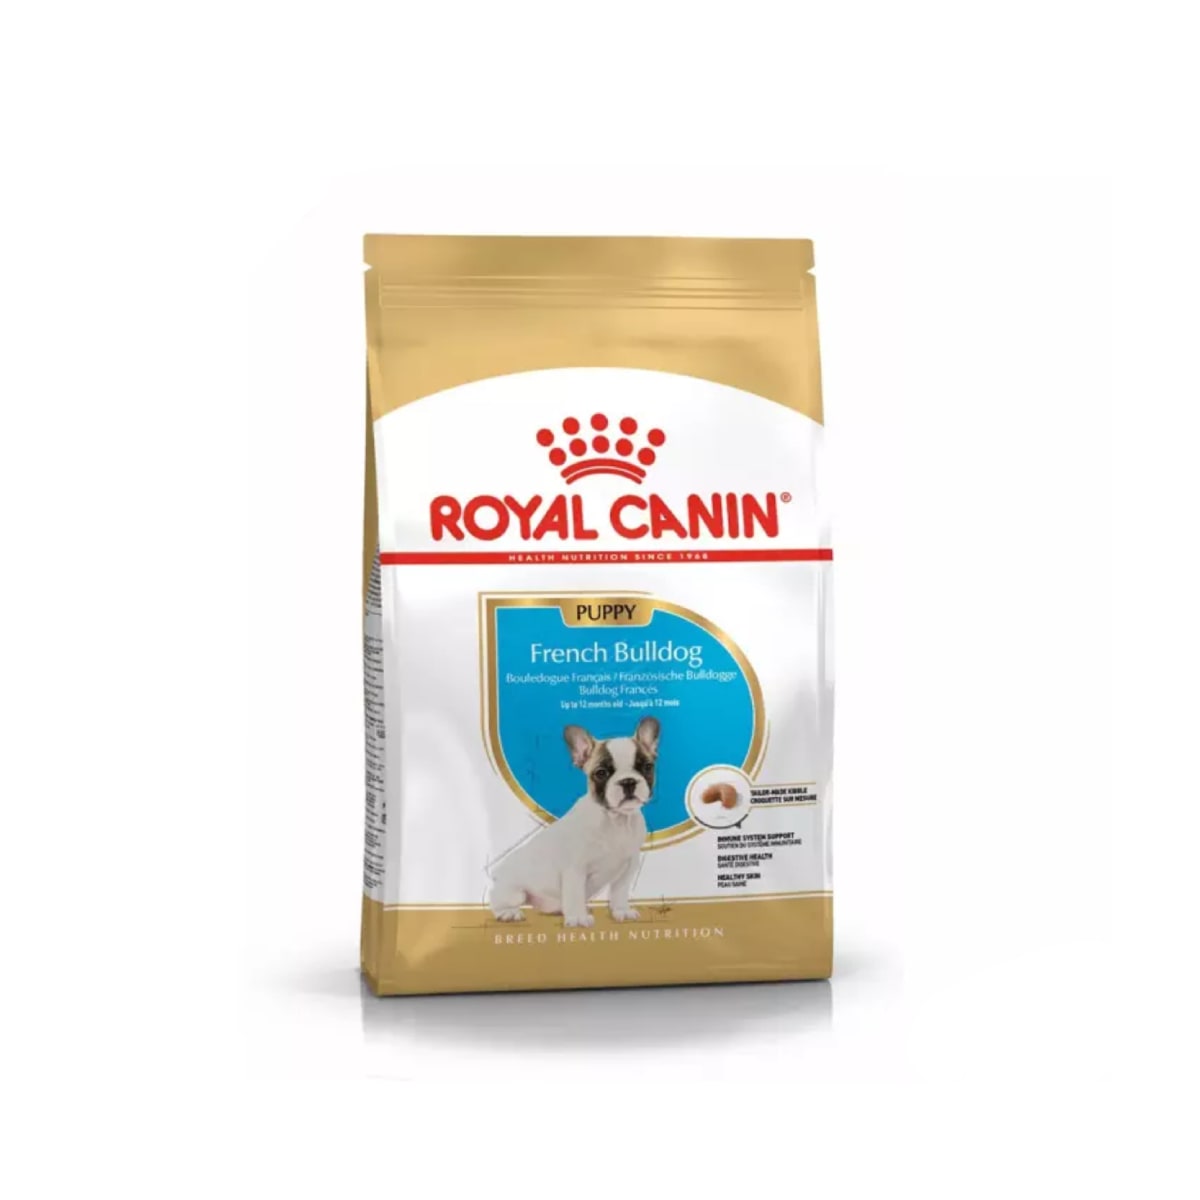 Royal Canin โรยัล คานิน อาหารเม็ด สำหรับลูกสุนัข สายพันธุ์เฟรนช์ บูลด็อก อายุต่ำกว่า 12 เดือน_1